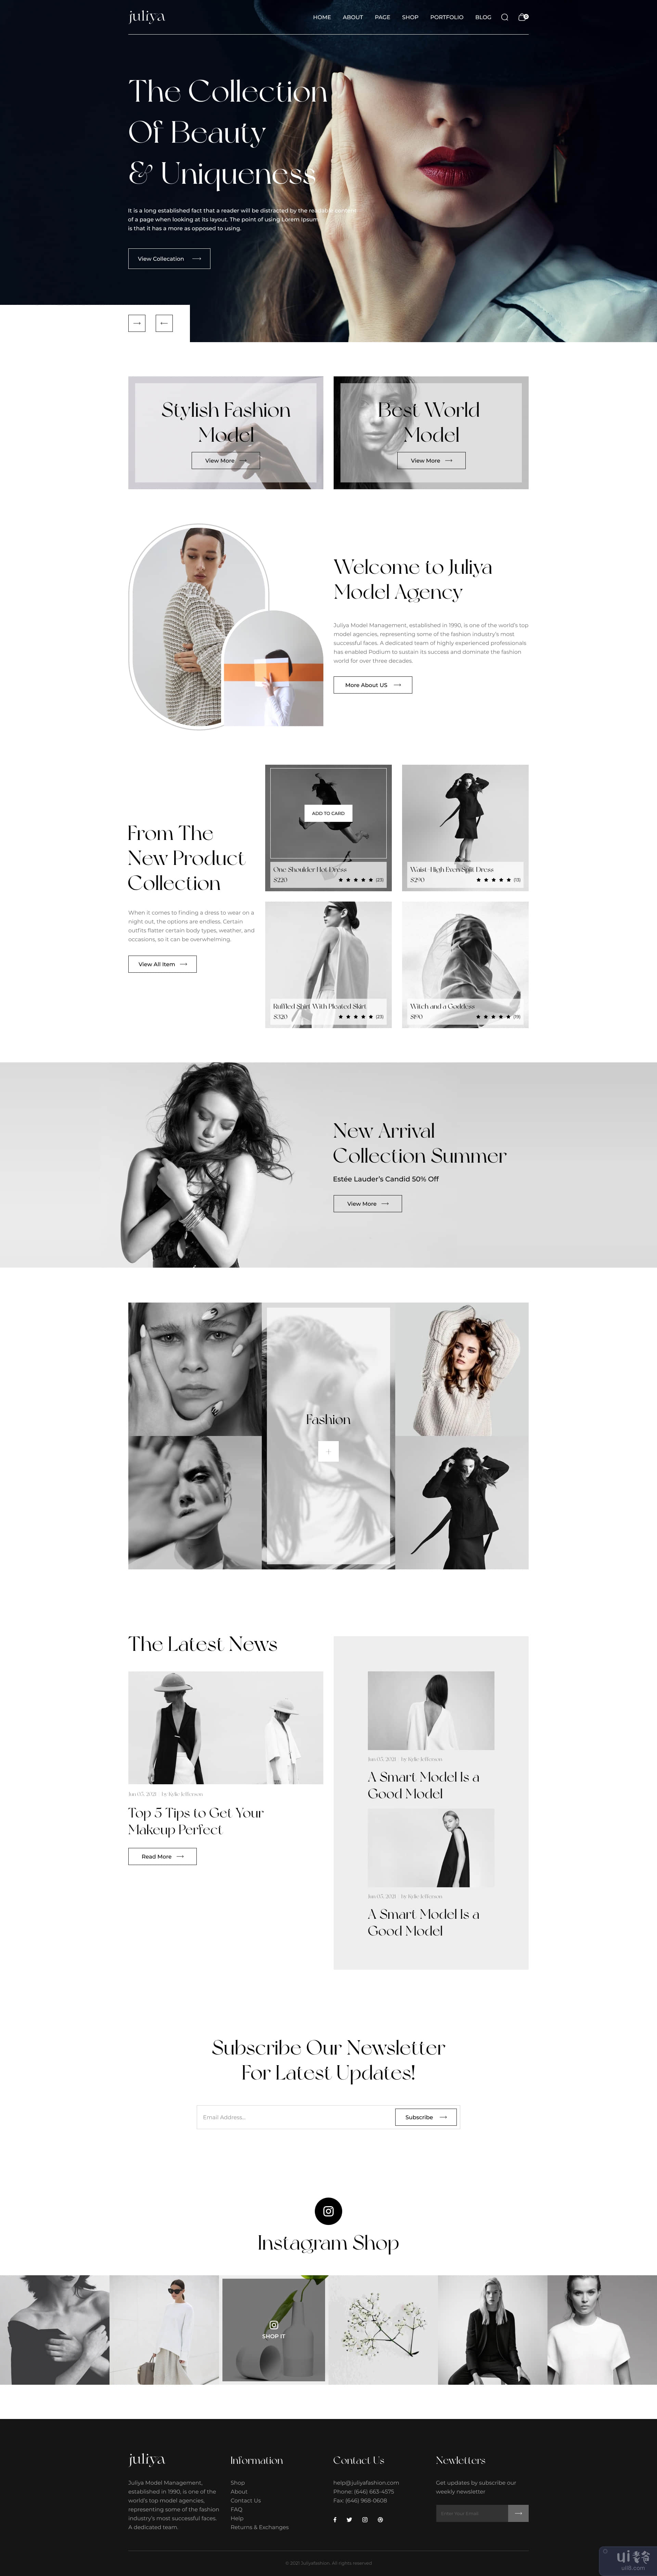 Juliya - 时尚电商网站 V1(Juliya - Fashion eCommerce Website V1)插图